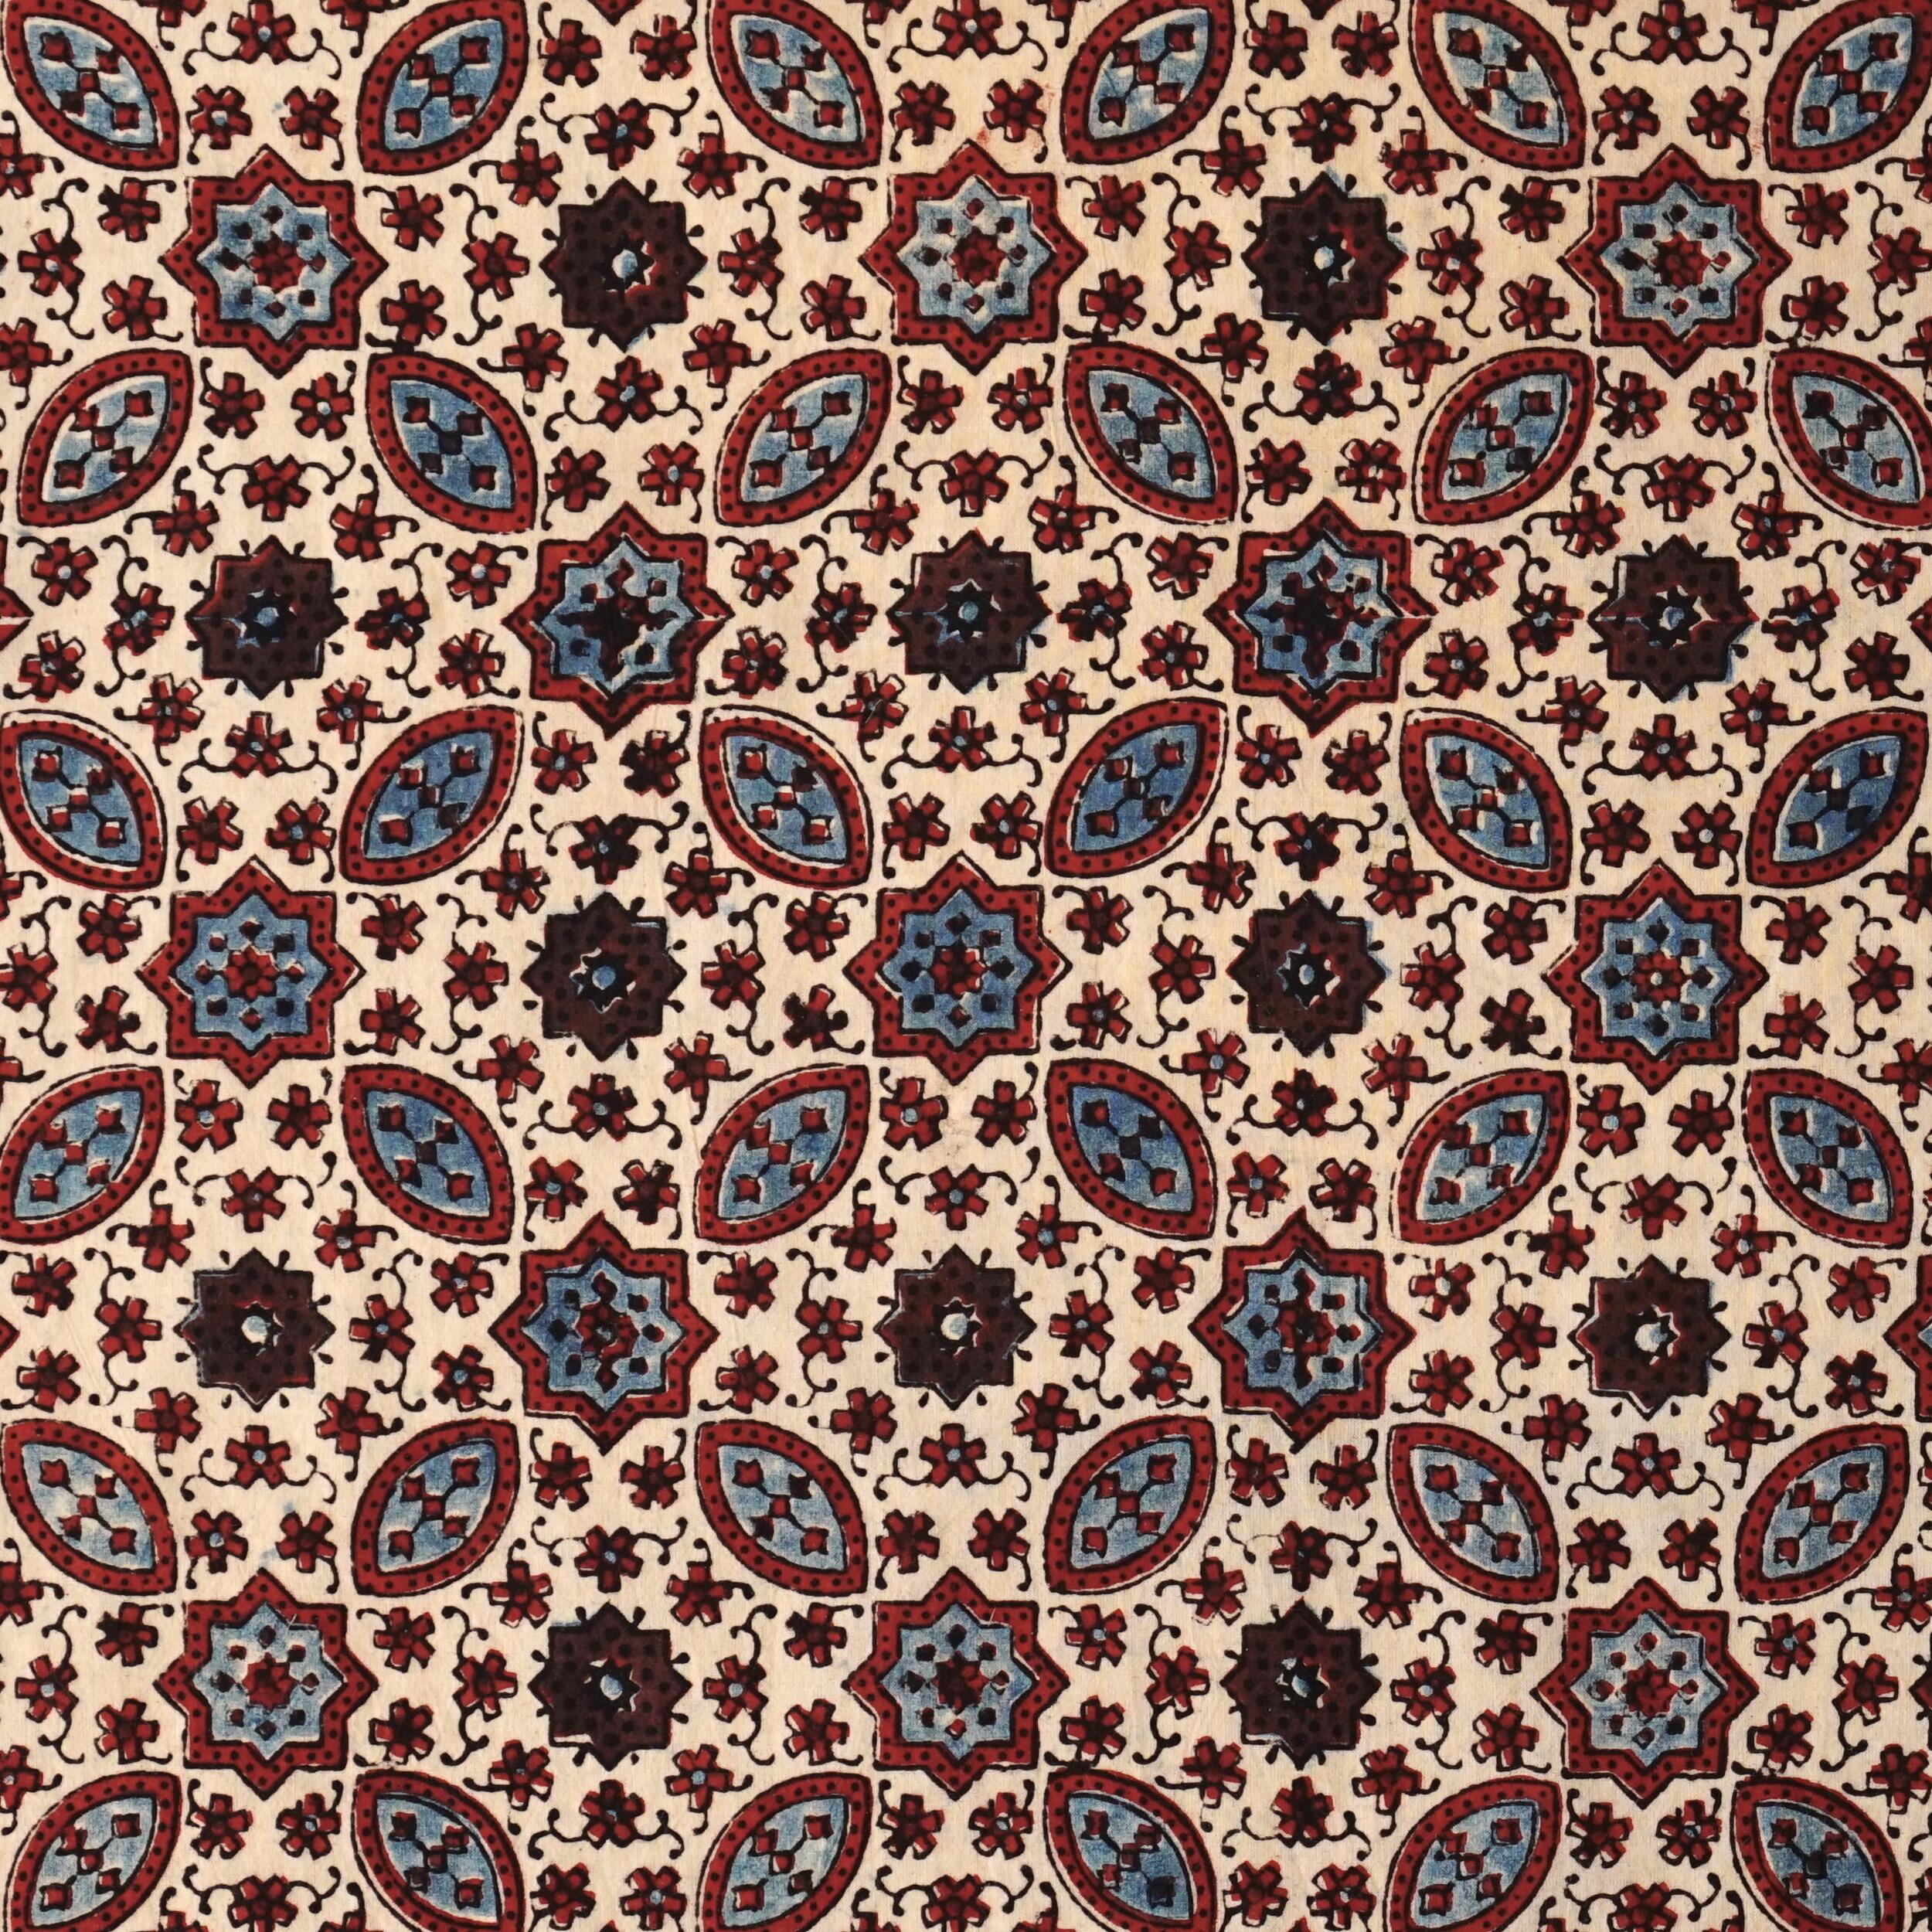 SIK33 - Indian Block-Printed Cotton - Murmurations Design - Indigo, Red & Black Dye - Flat